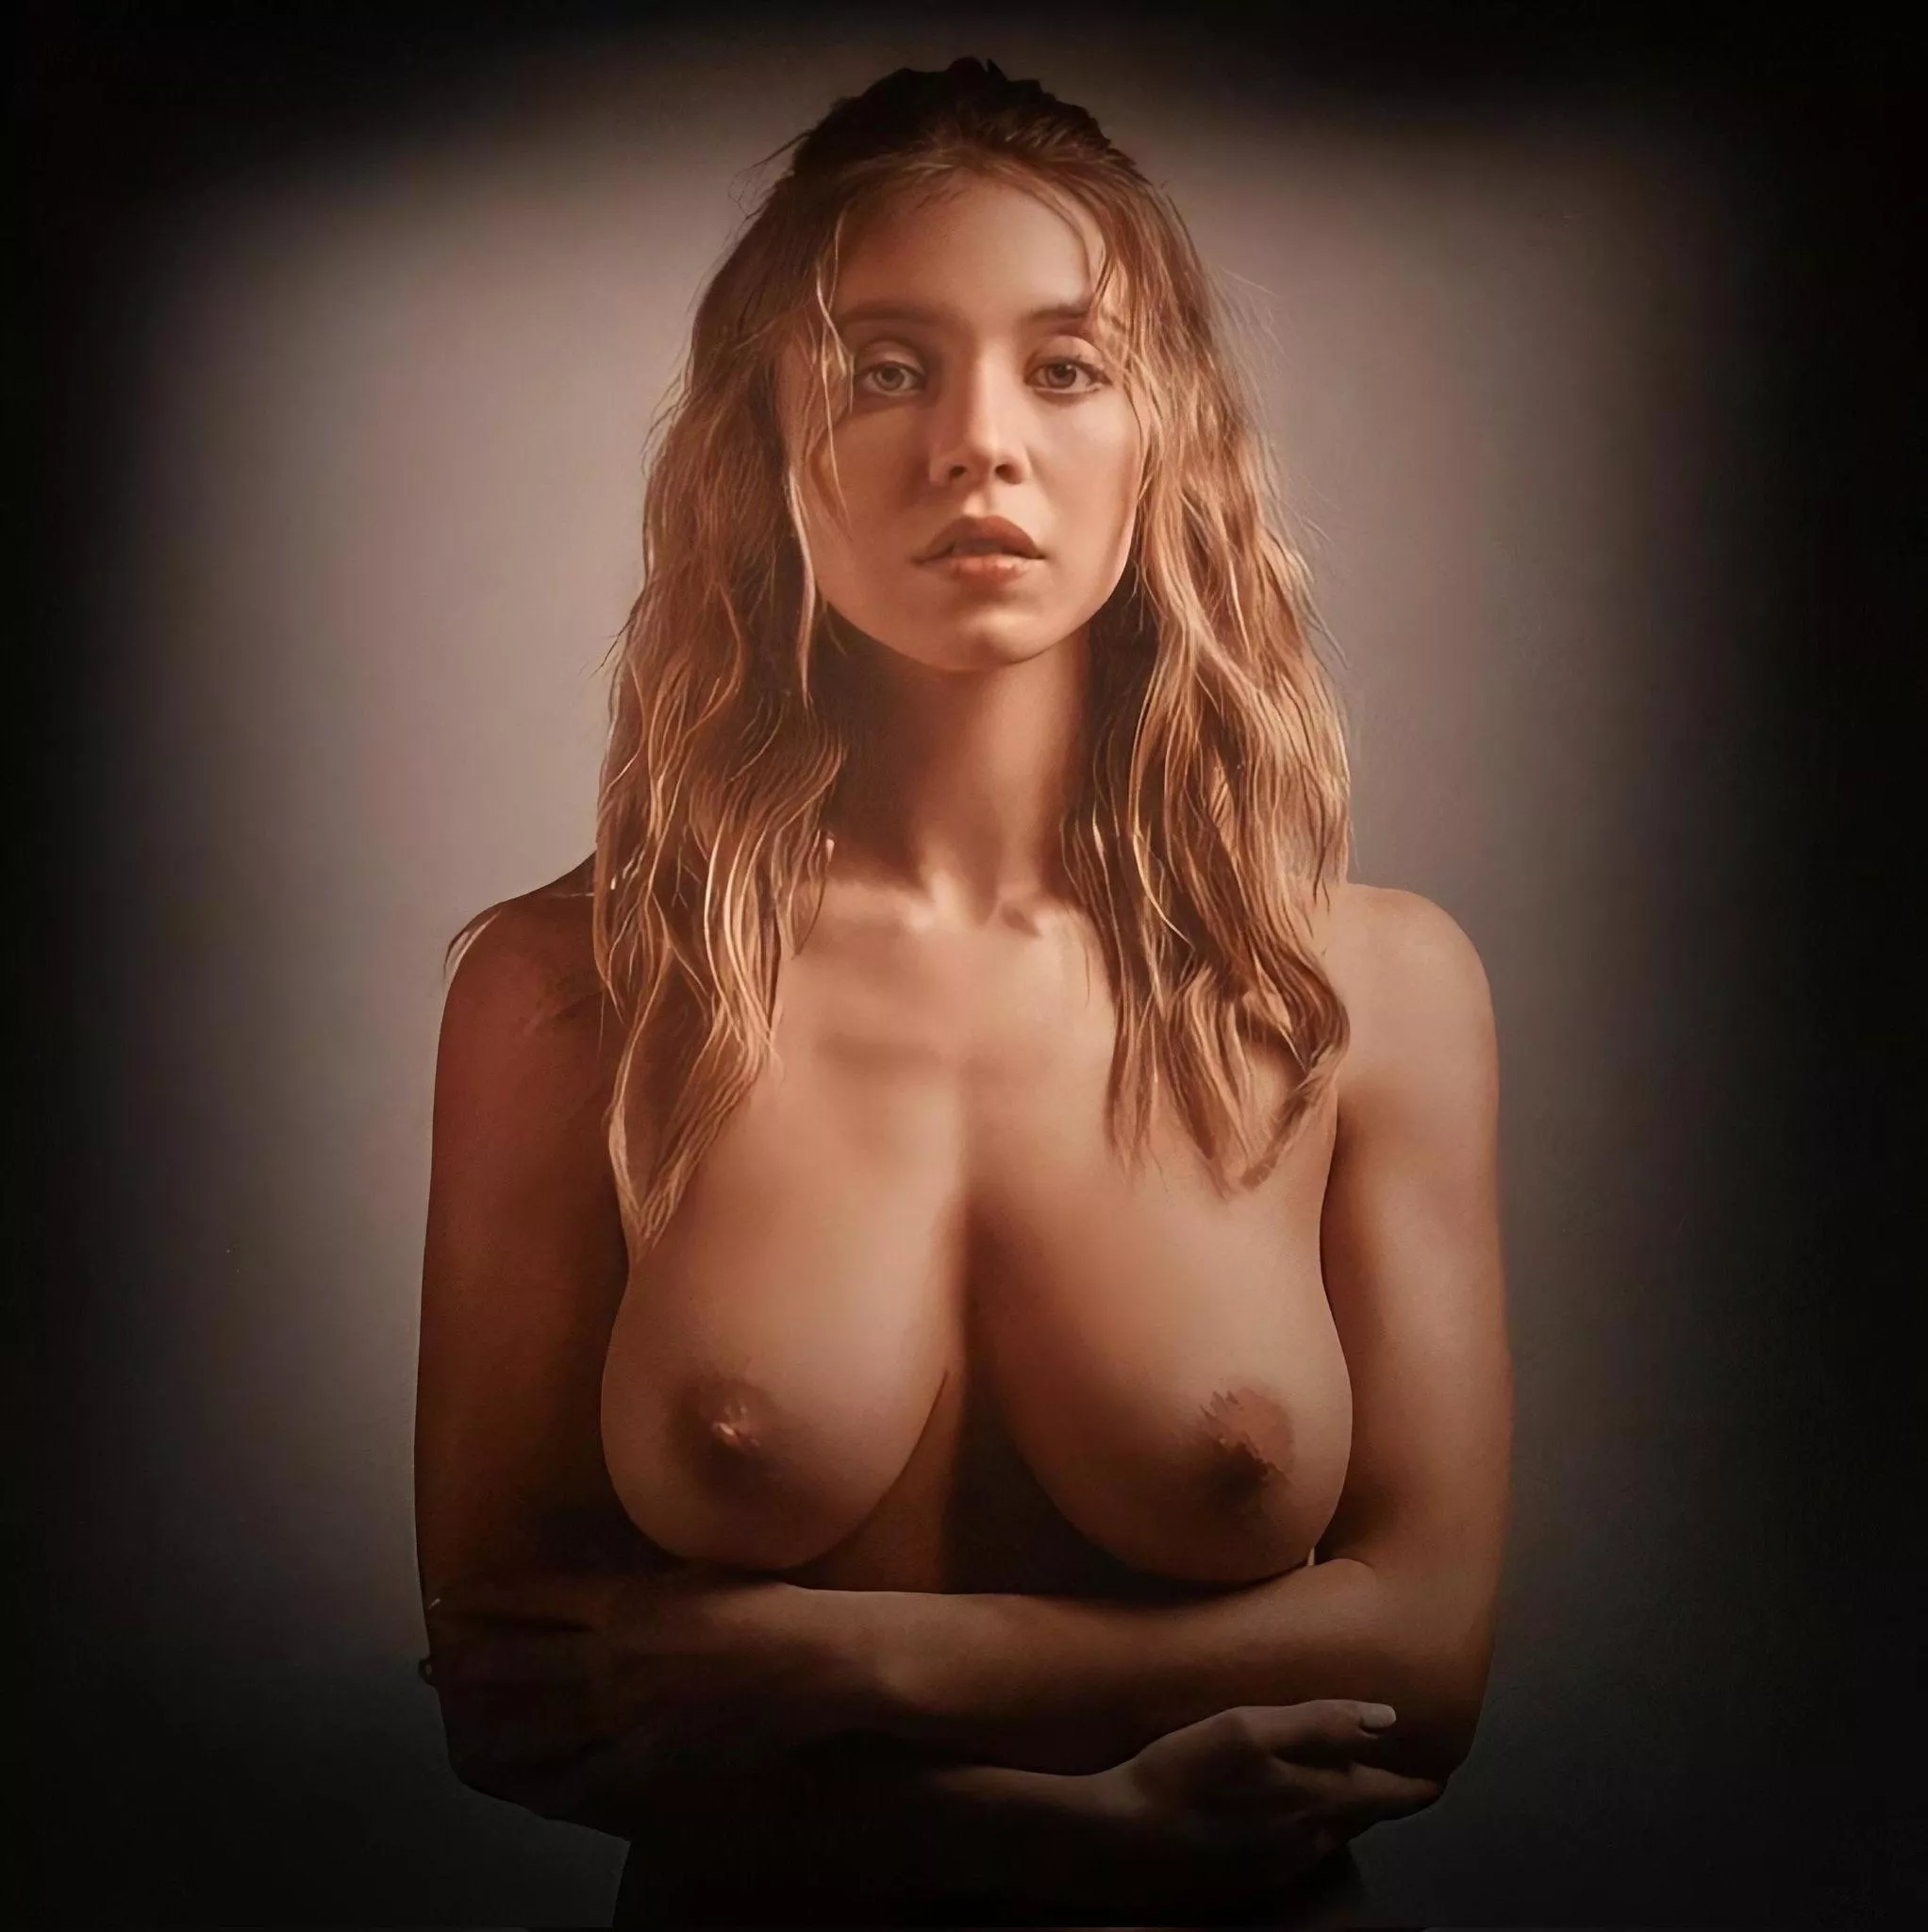 Jones photos nude sydney - Chloë Grace